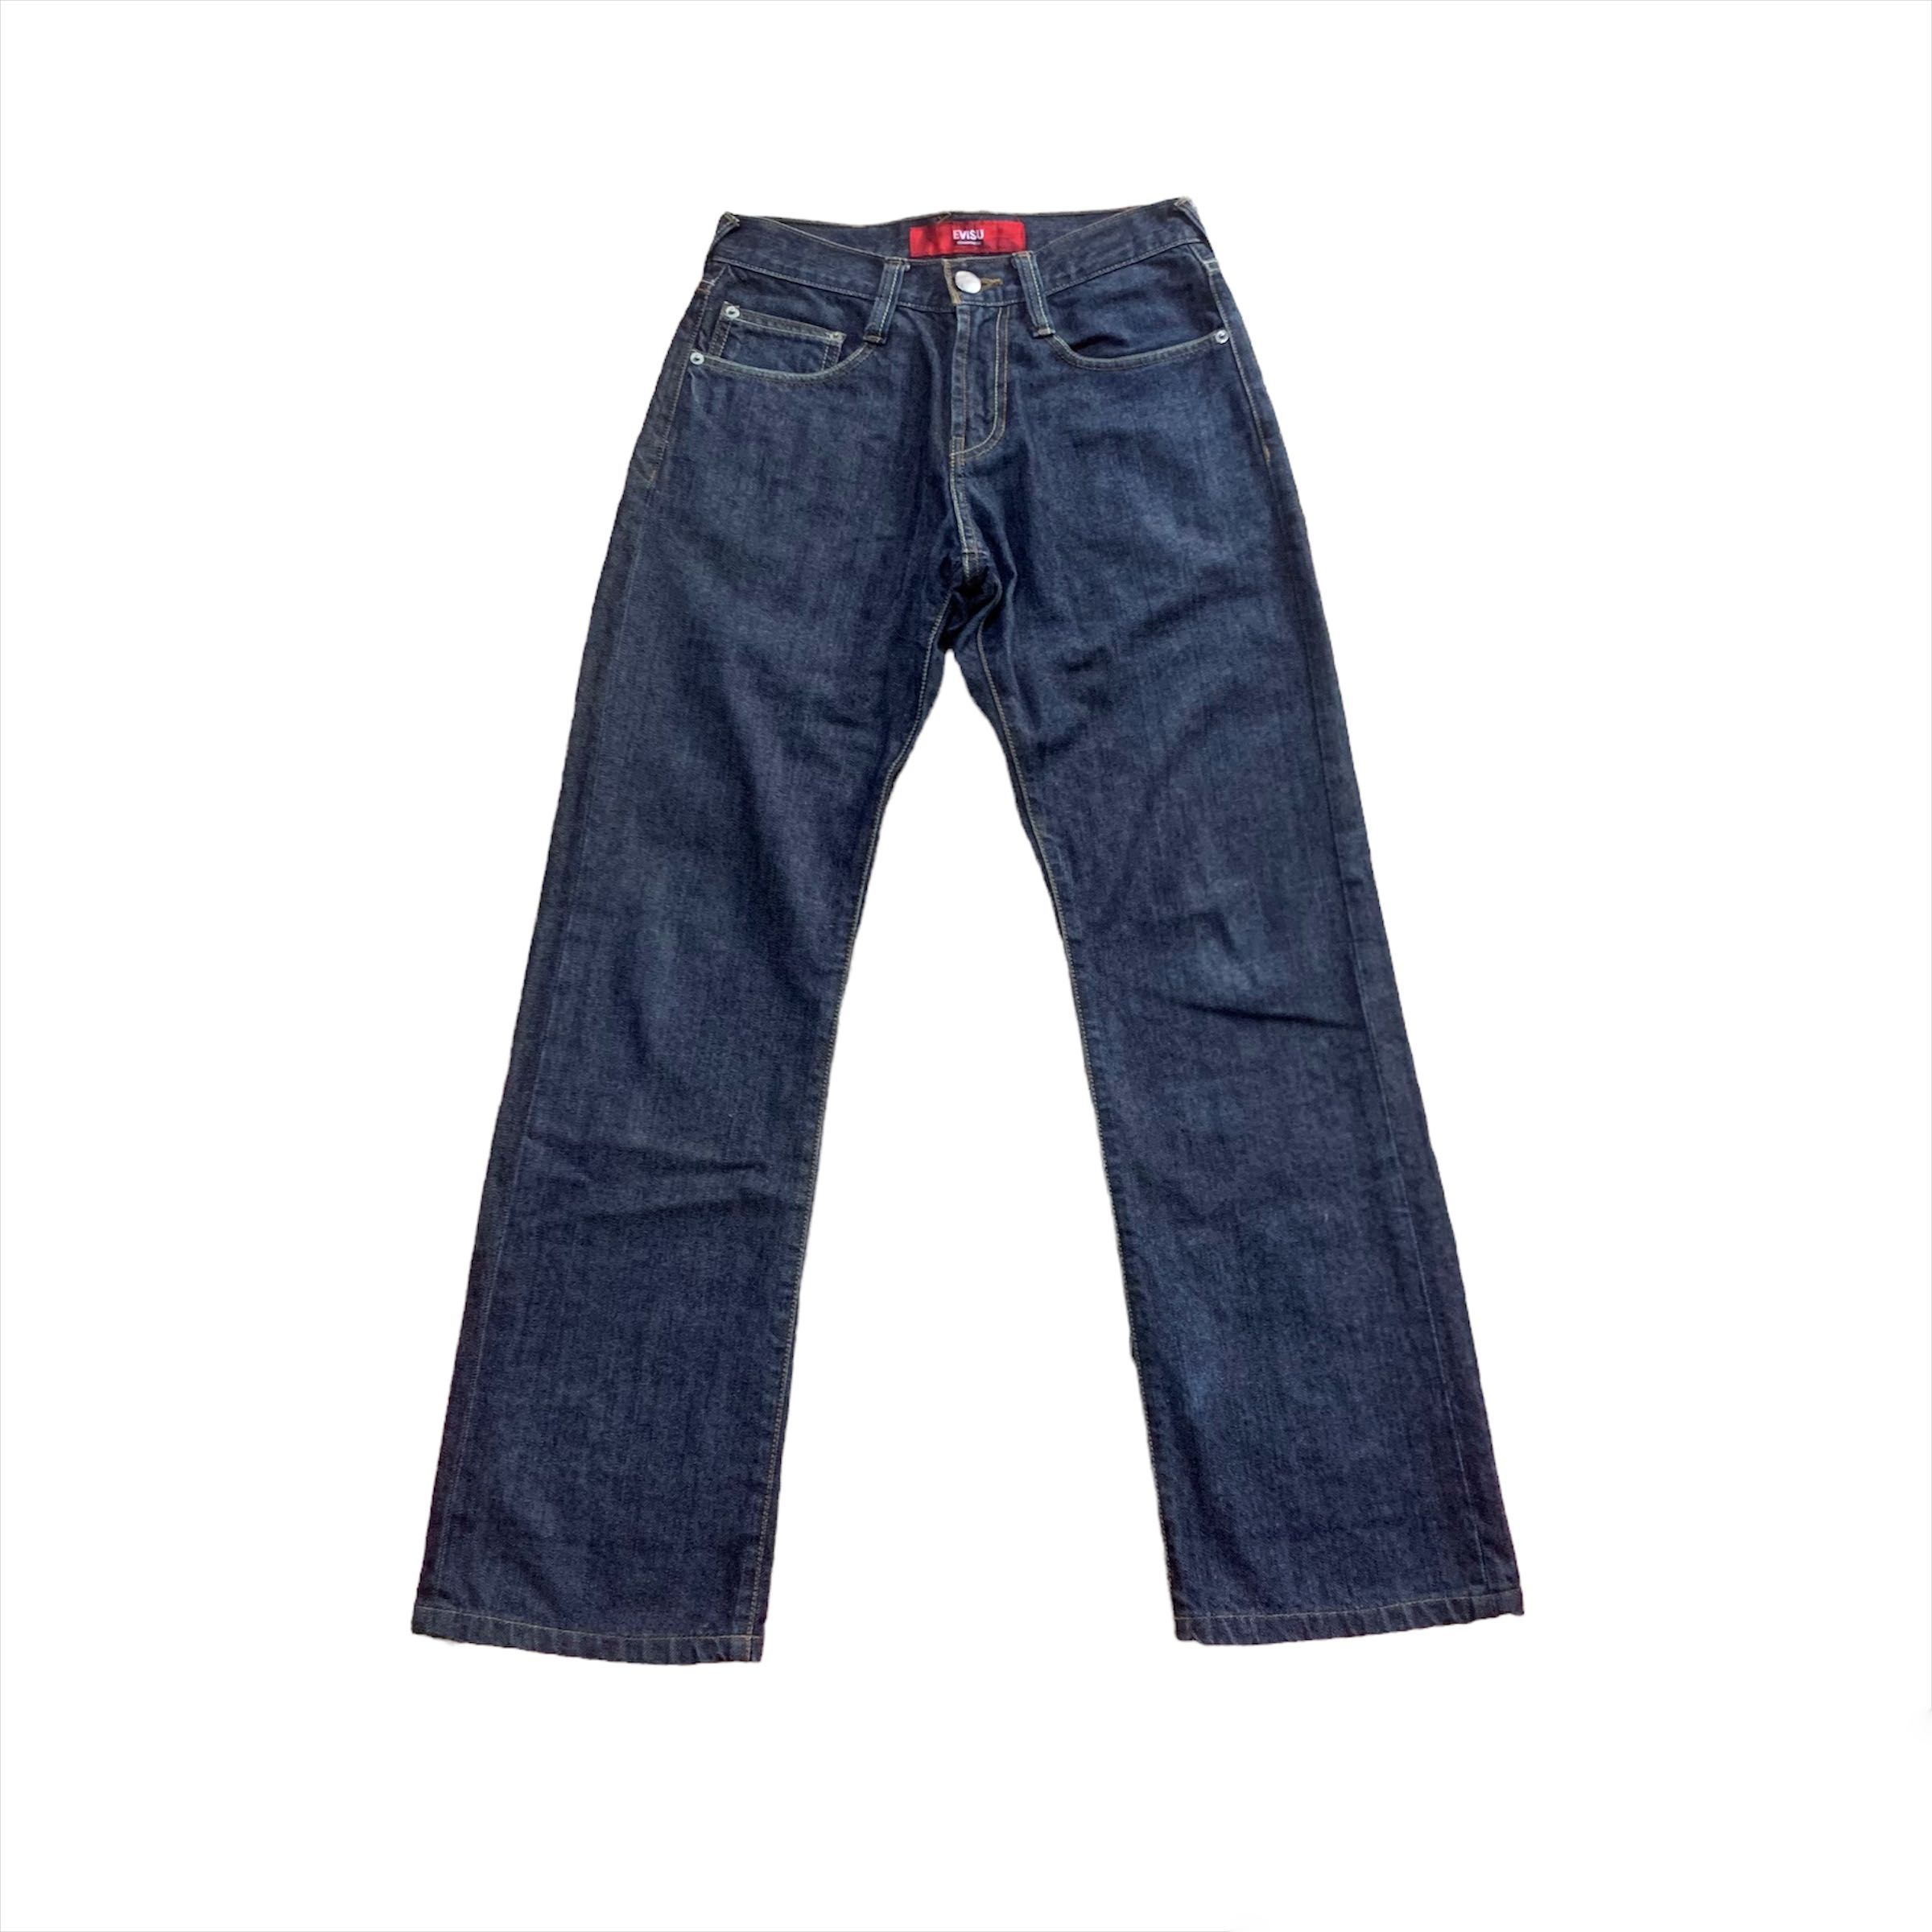 JAPANESE BRAND 🔥 Evisu Genes DenimMaster Selvedge Jeans - 1